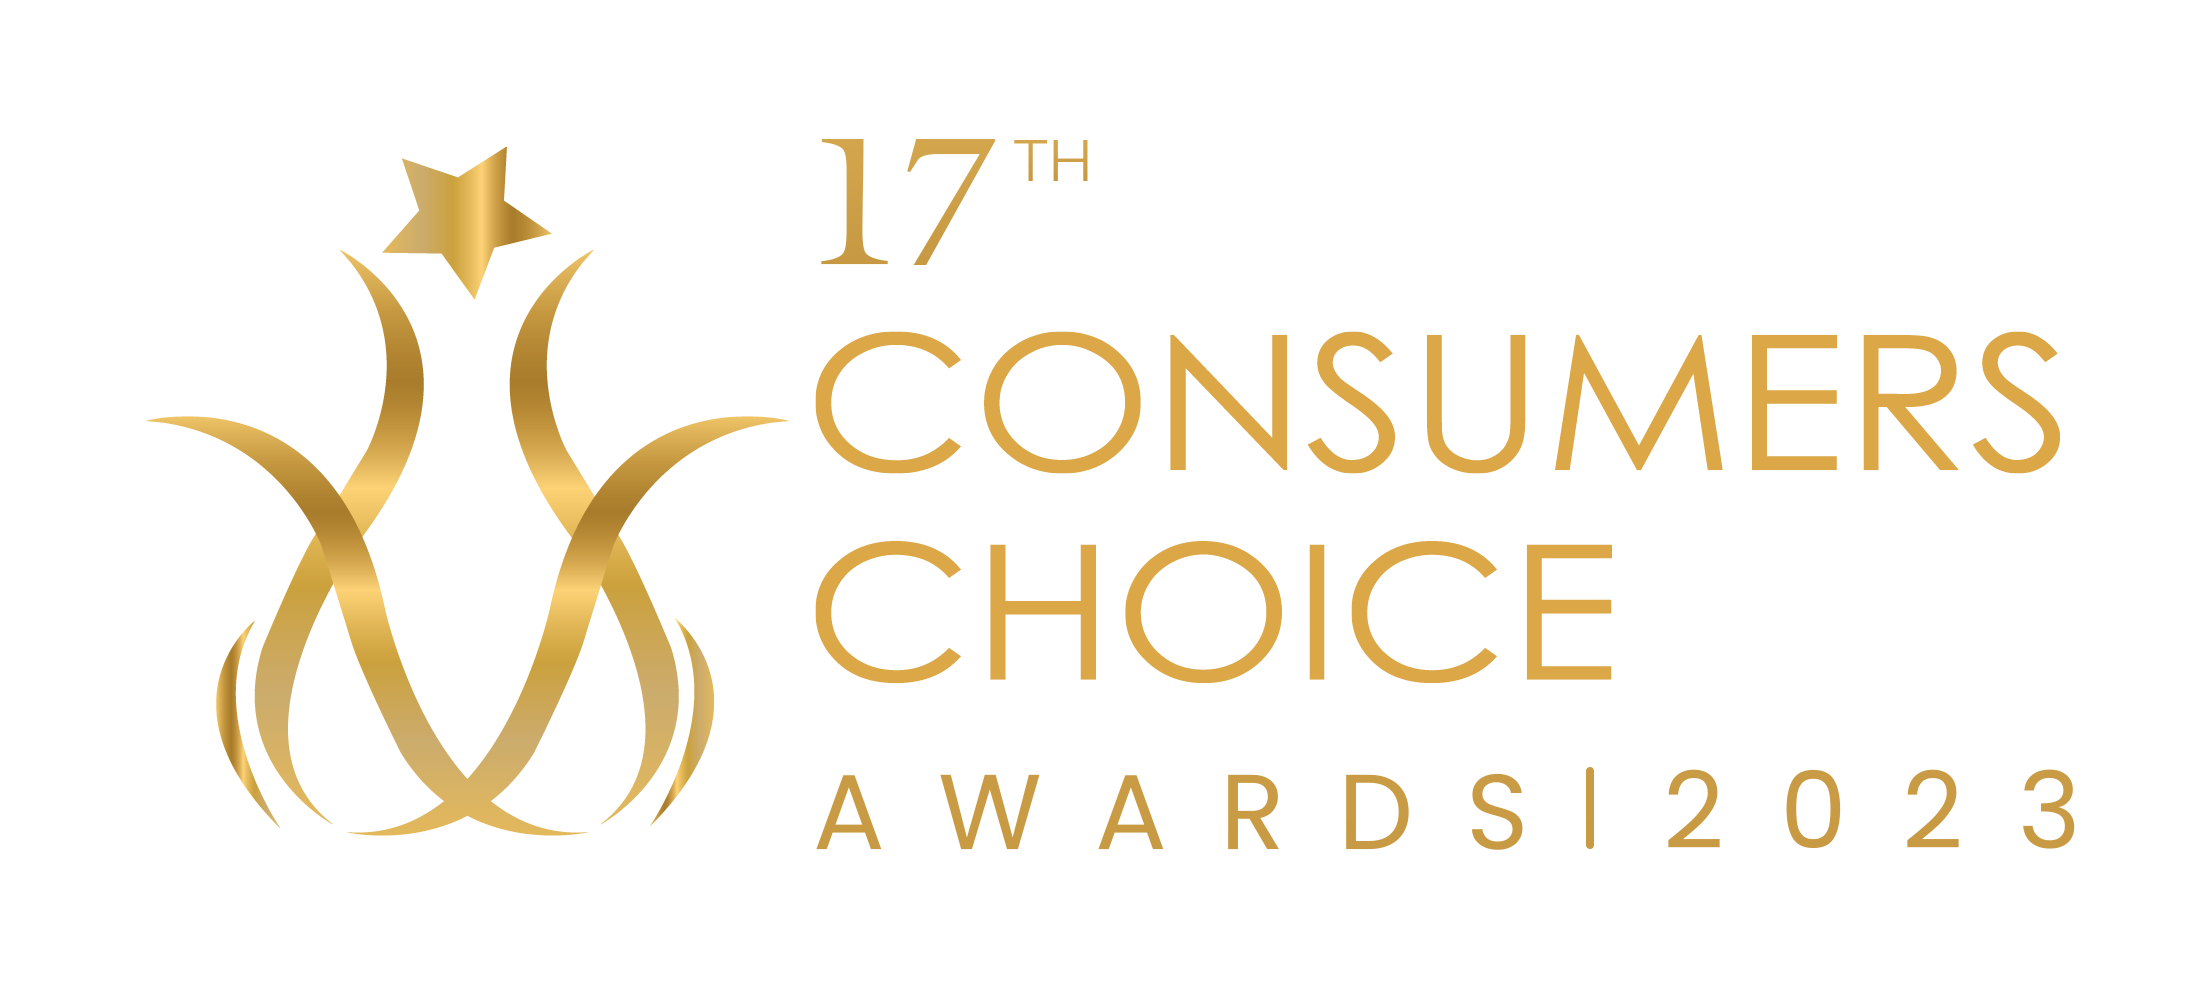 Consumer Choice Award Logo